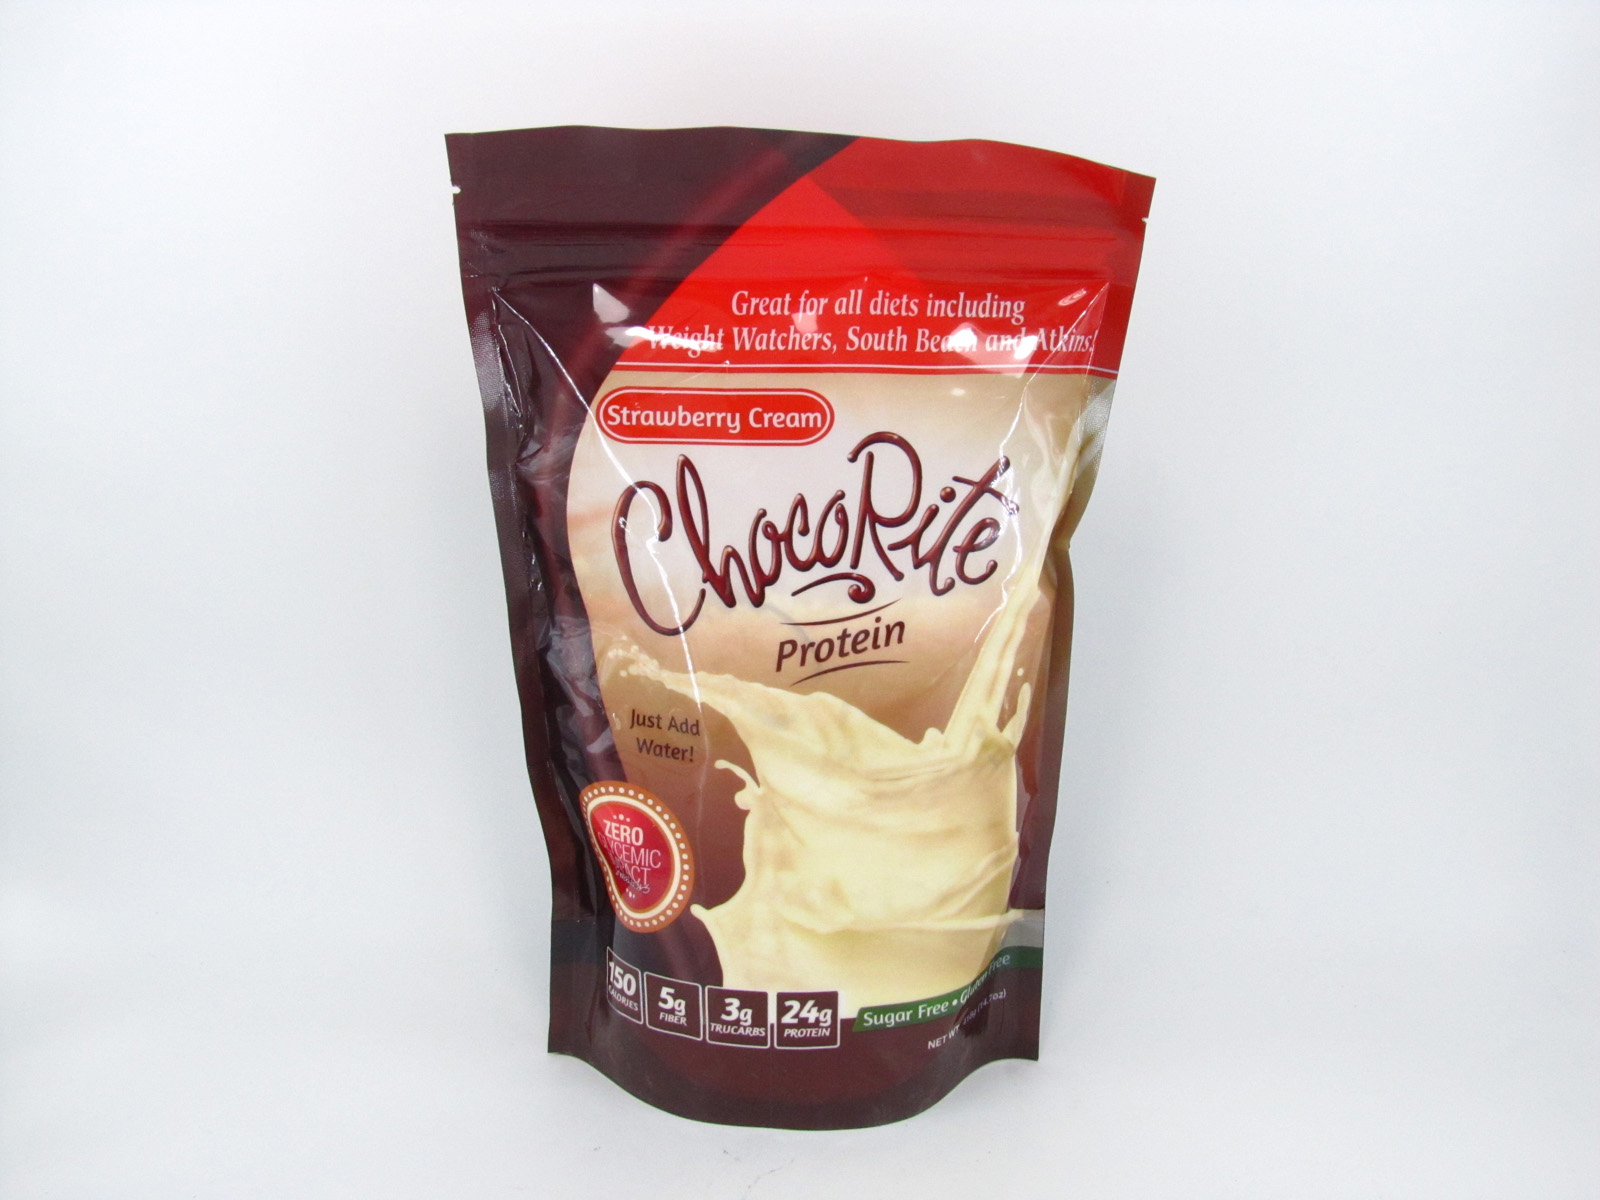 Chocorite Protein Shake (1lb)- Strawberry Cream - front view